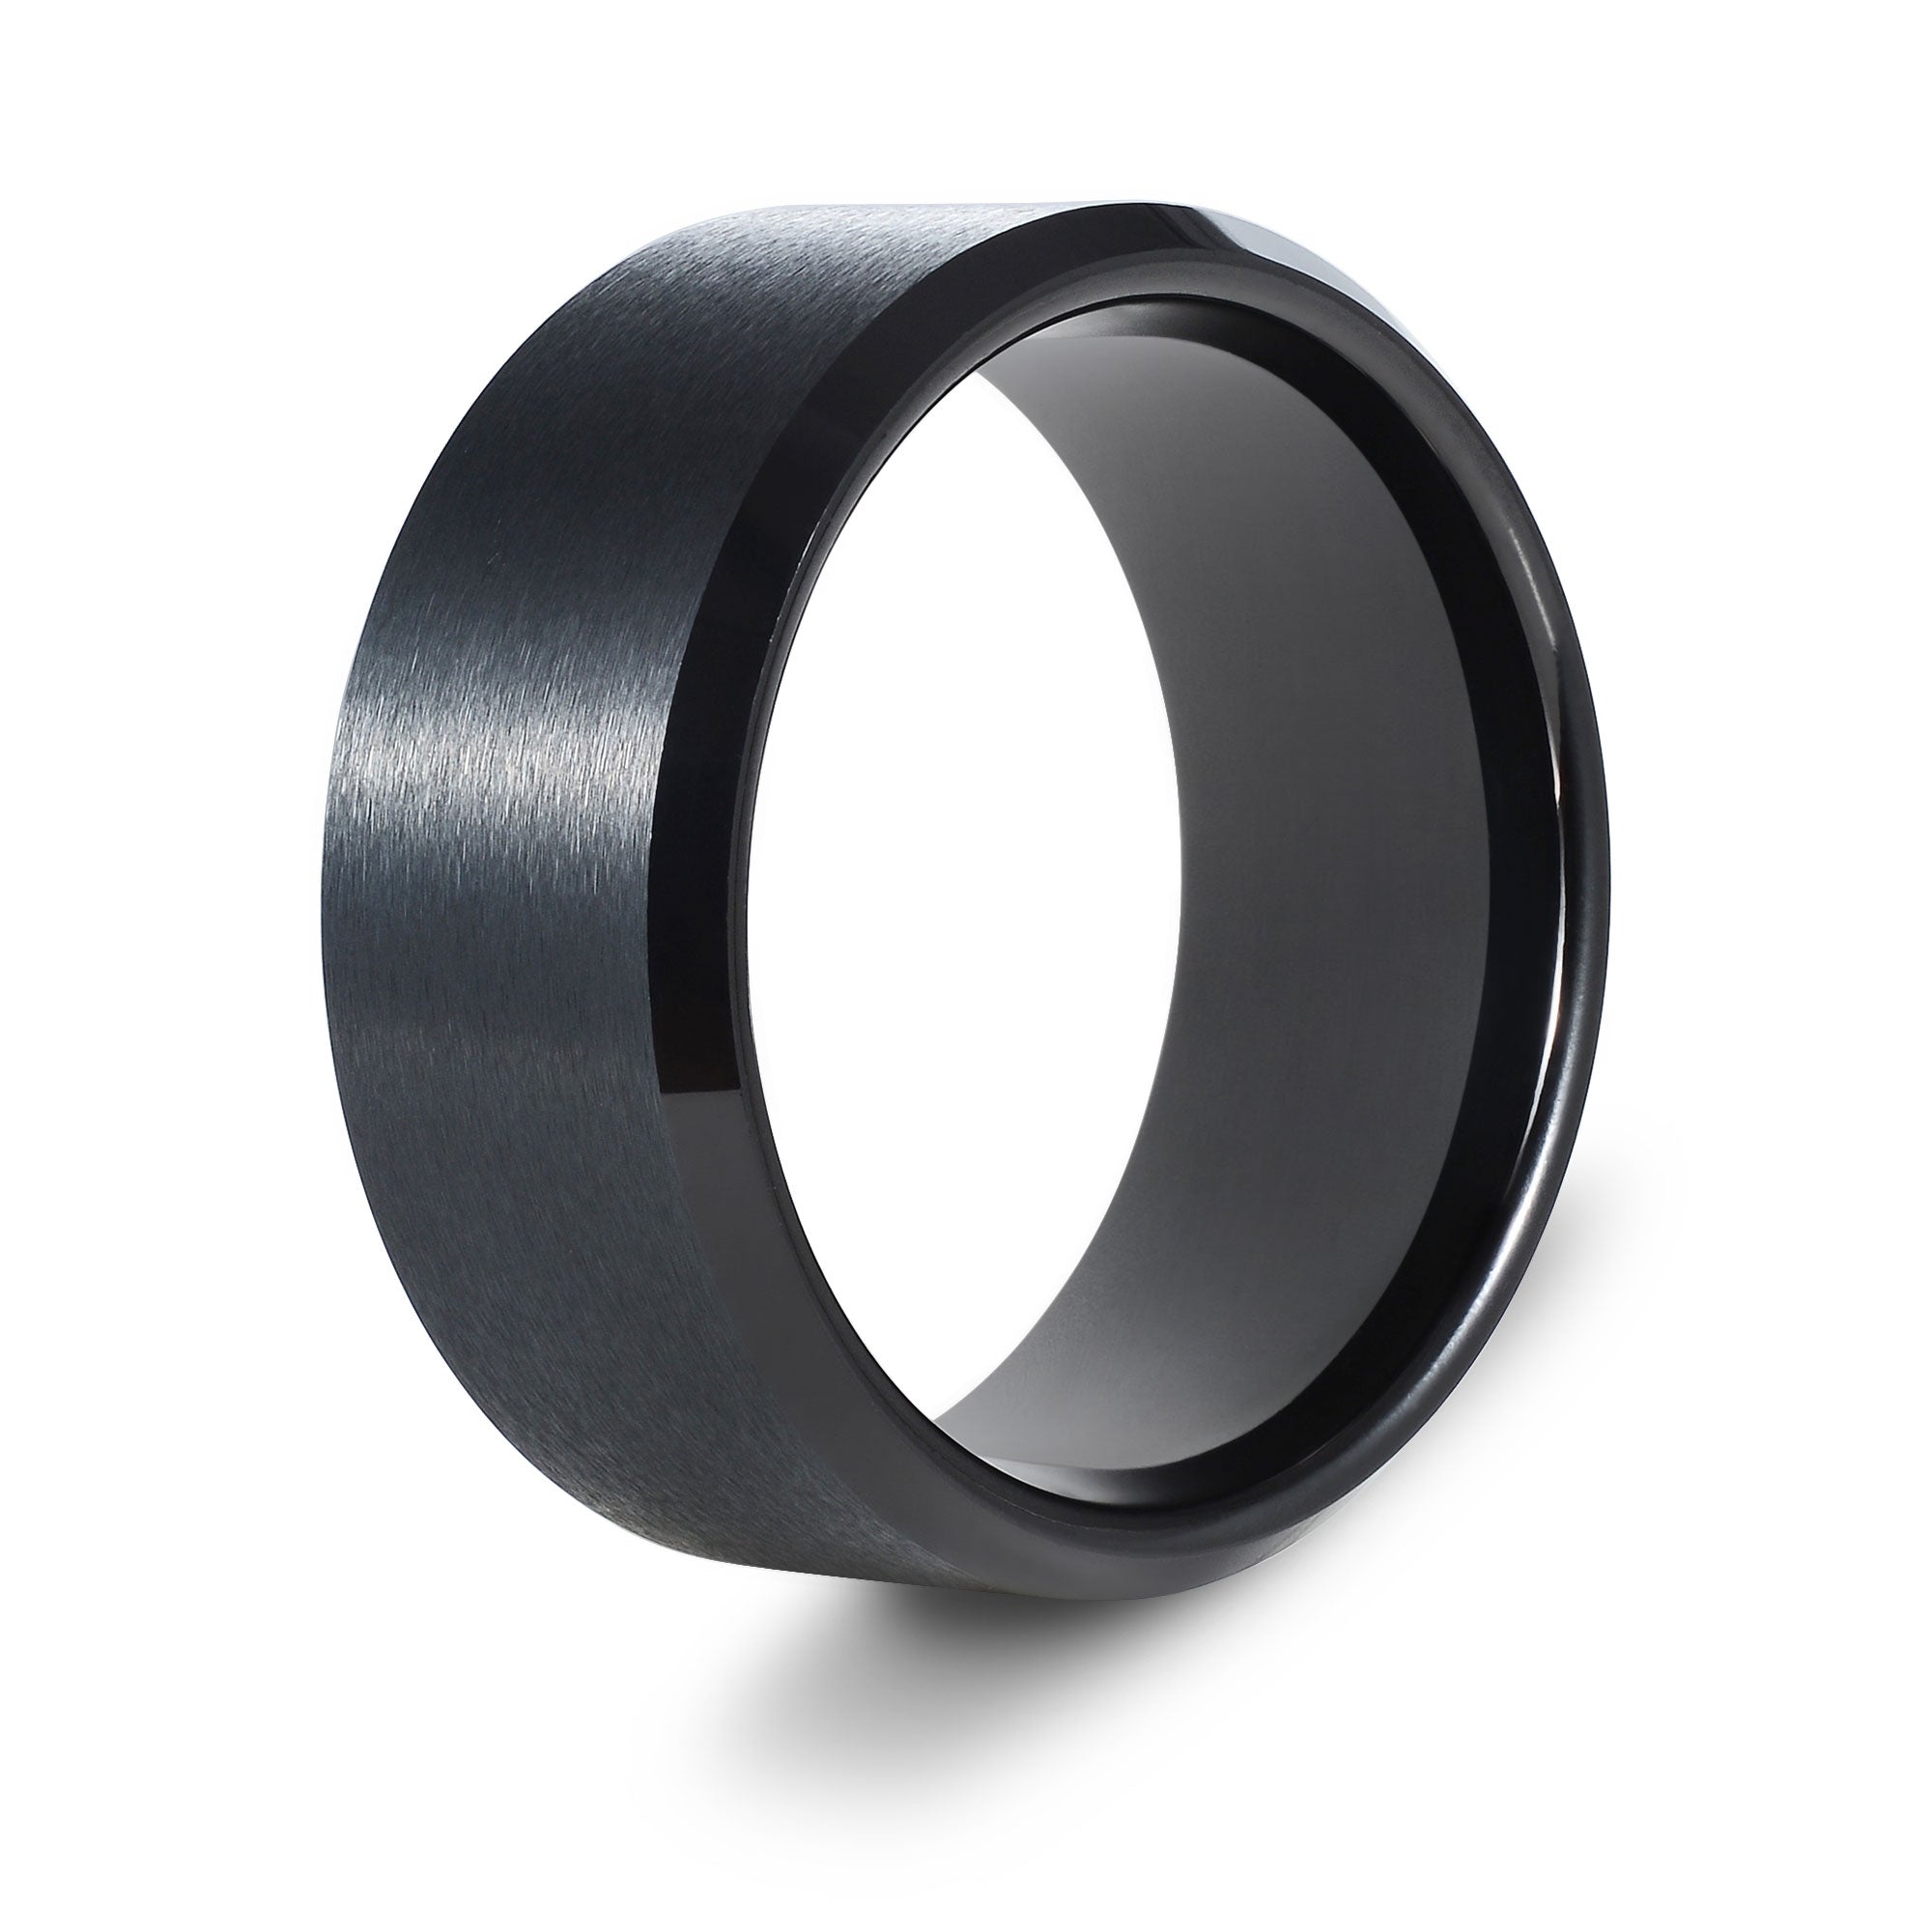 The Darknight - Black 10mm Brushed Tungsten Beveled Ring